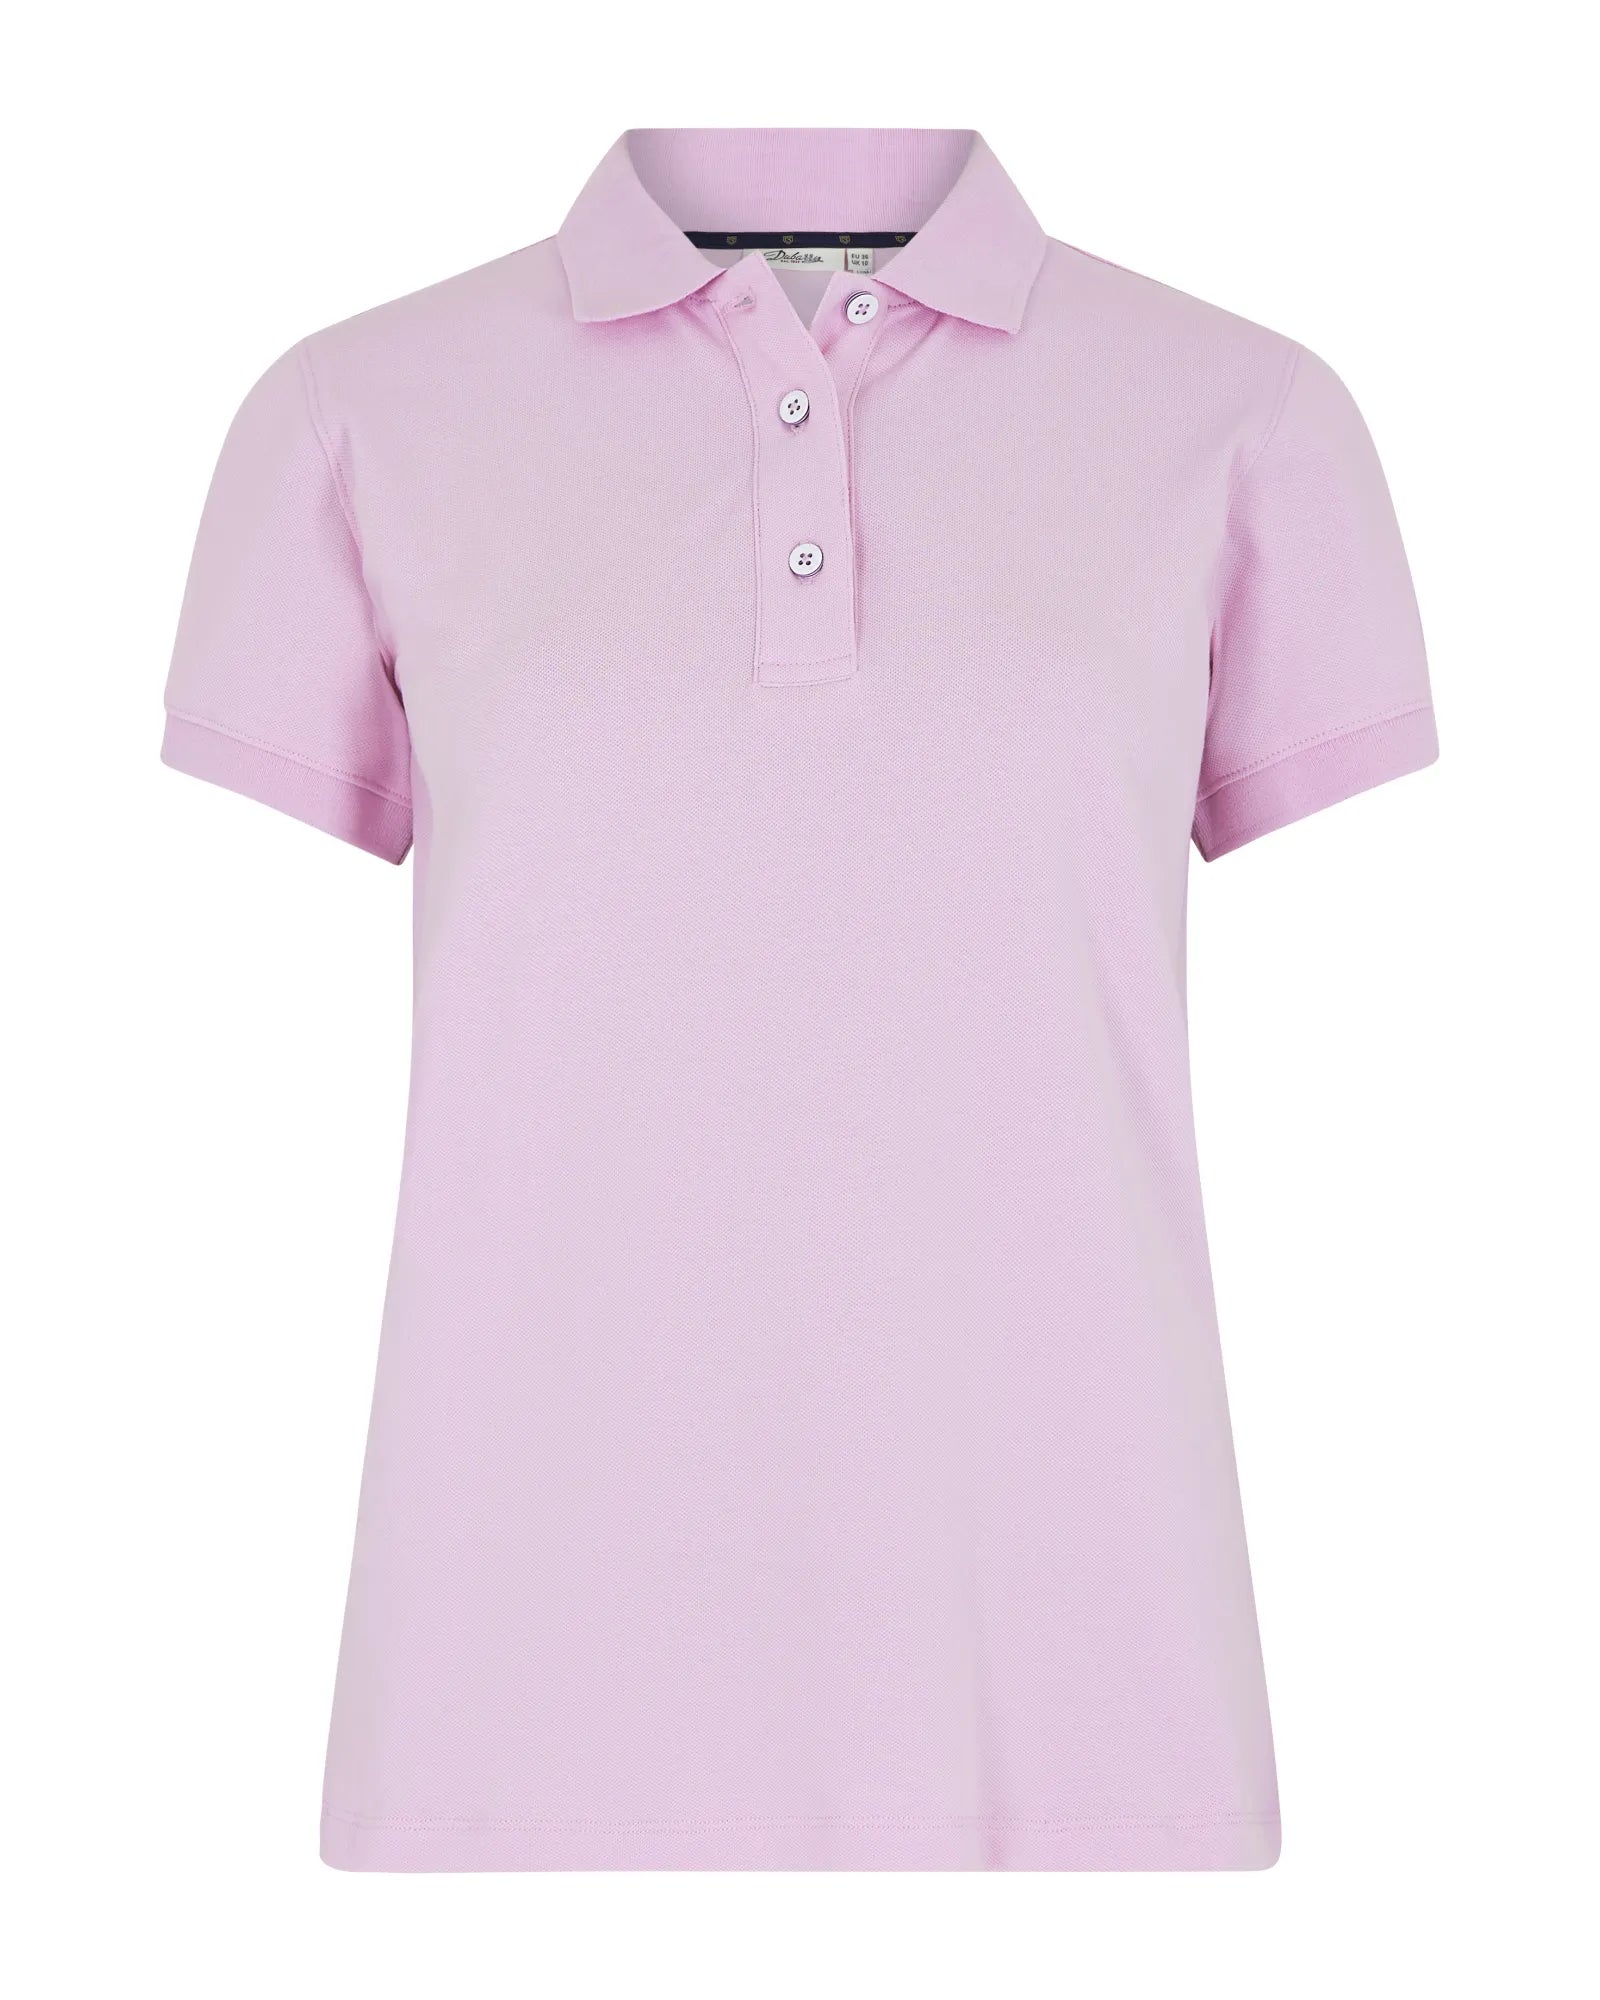 Drury Polo Shirt - Pink